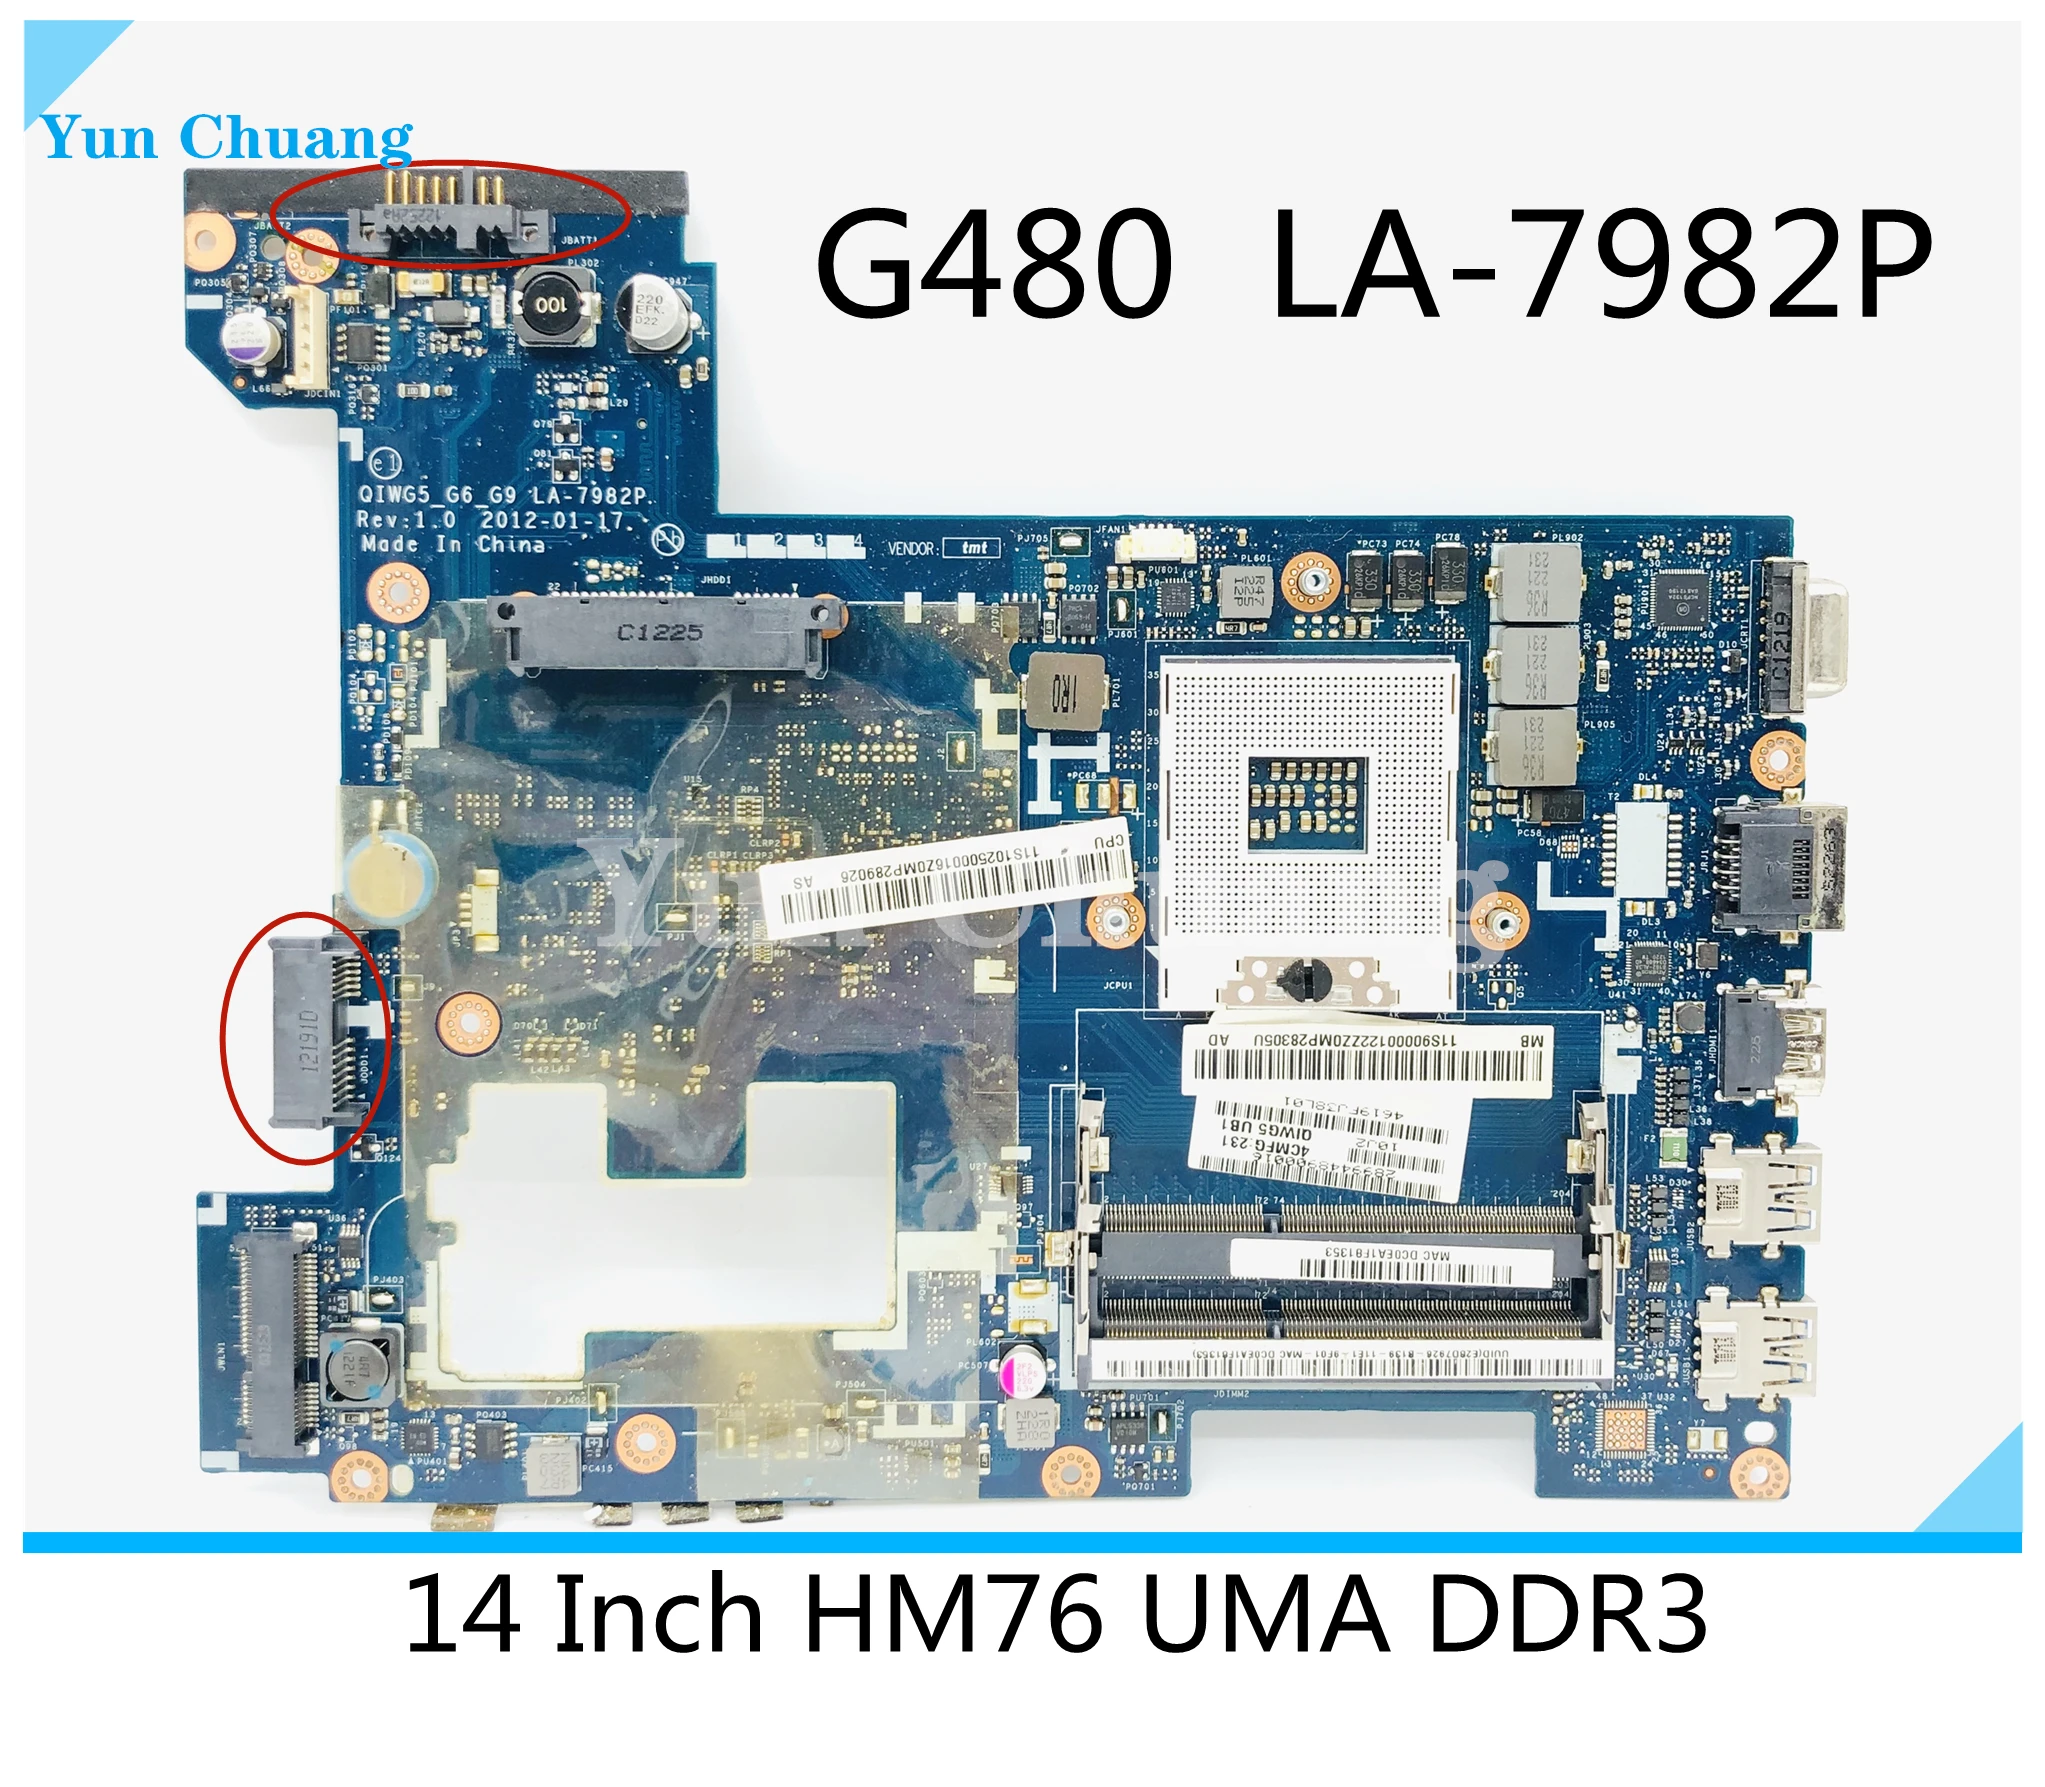 QIWG5_G6_G9 LA-7982P материнская плата для ноутбука Lenovo G480 ноутбук mtherboard PGA989 HM76 DDR3 100%